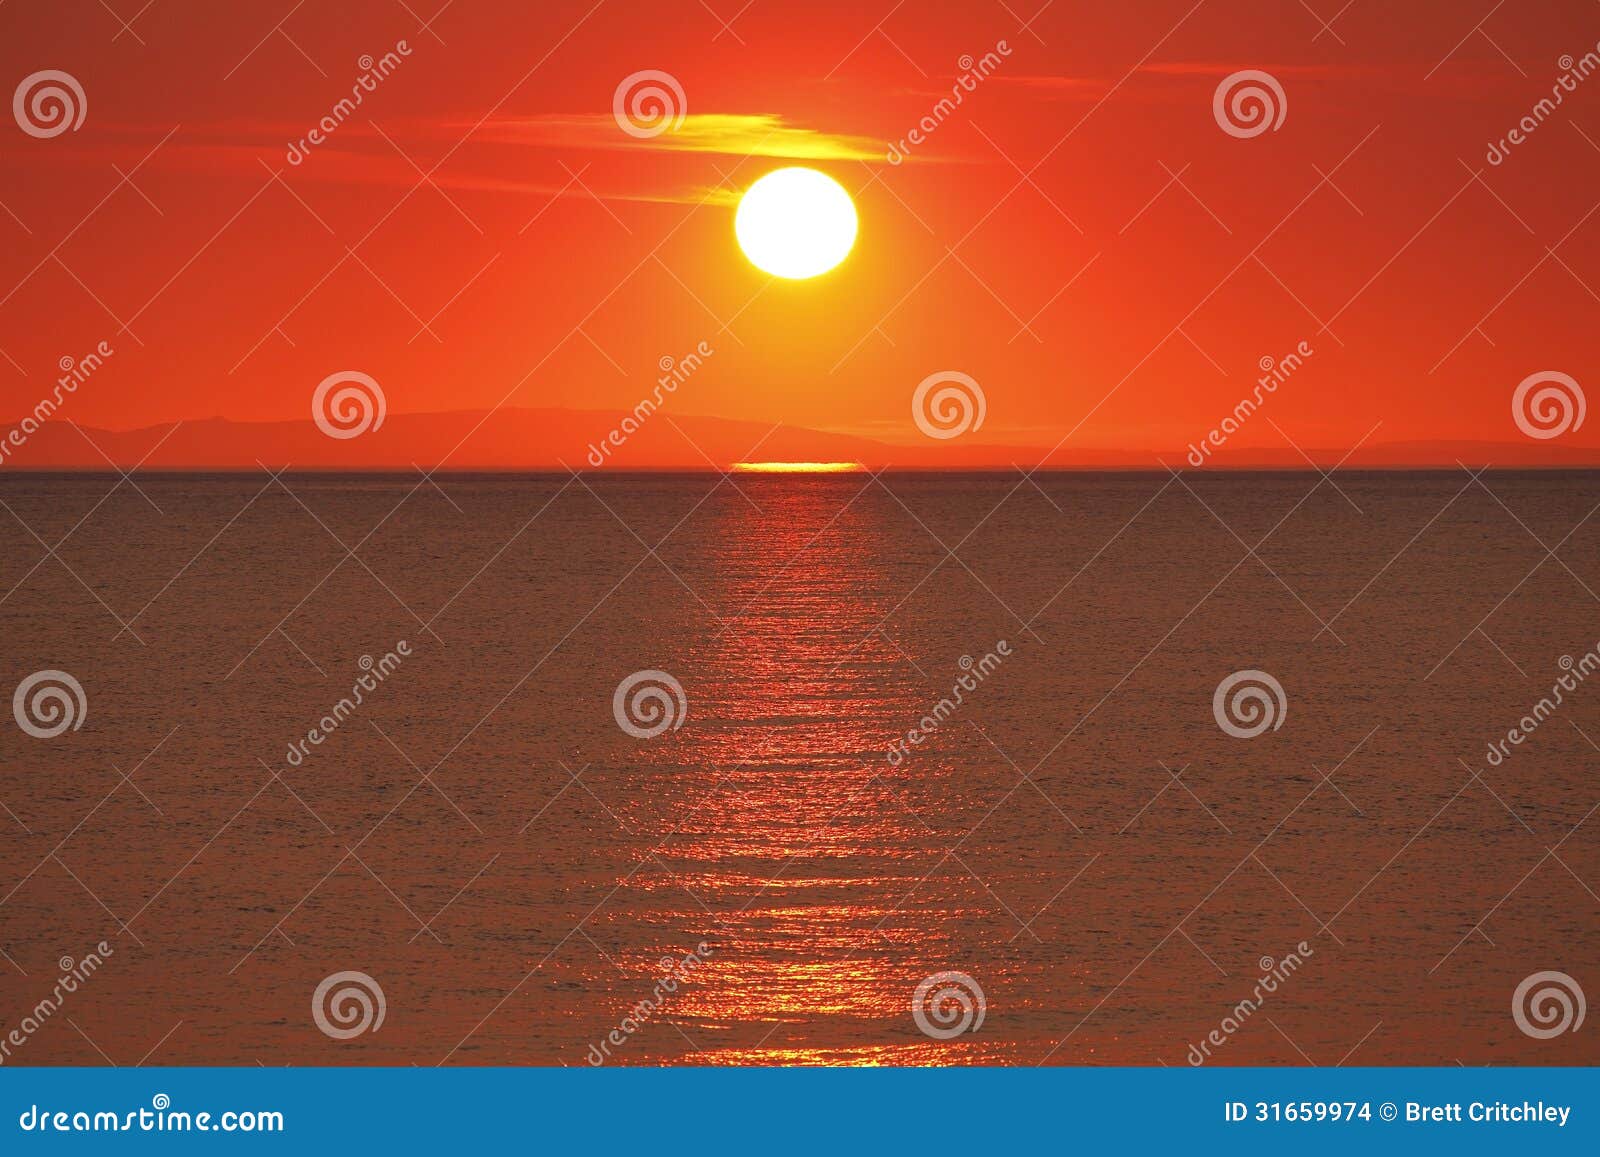 golden sunset over water